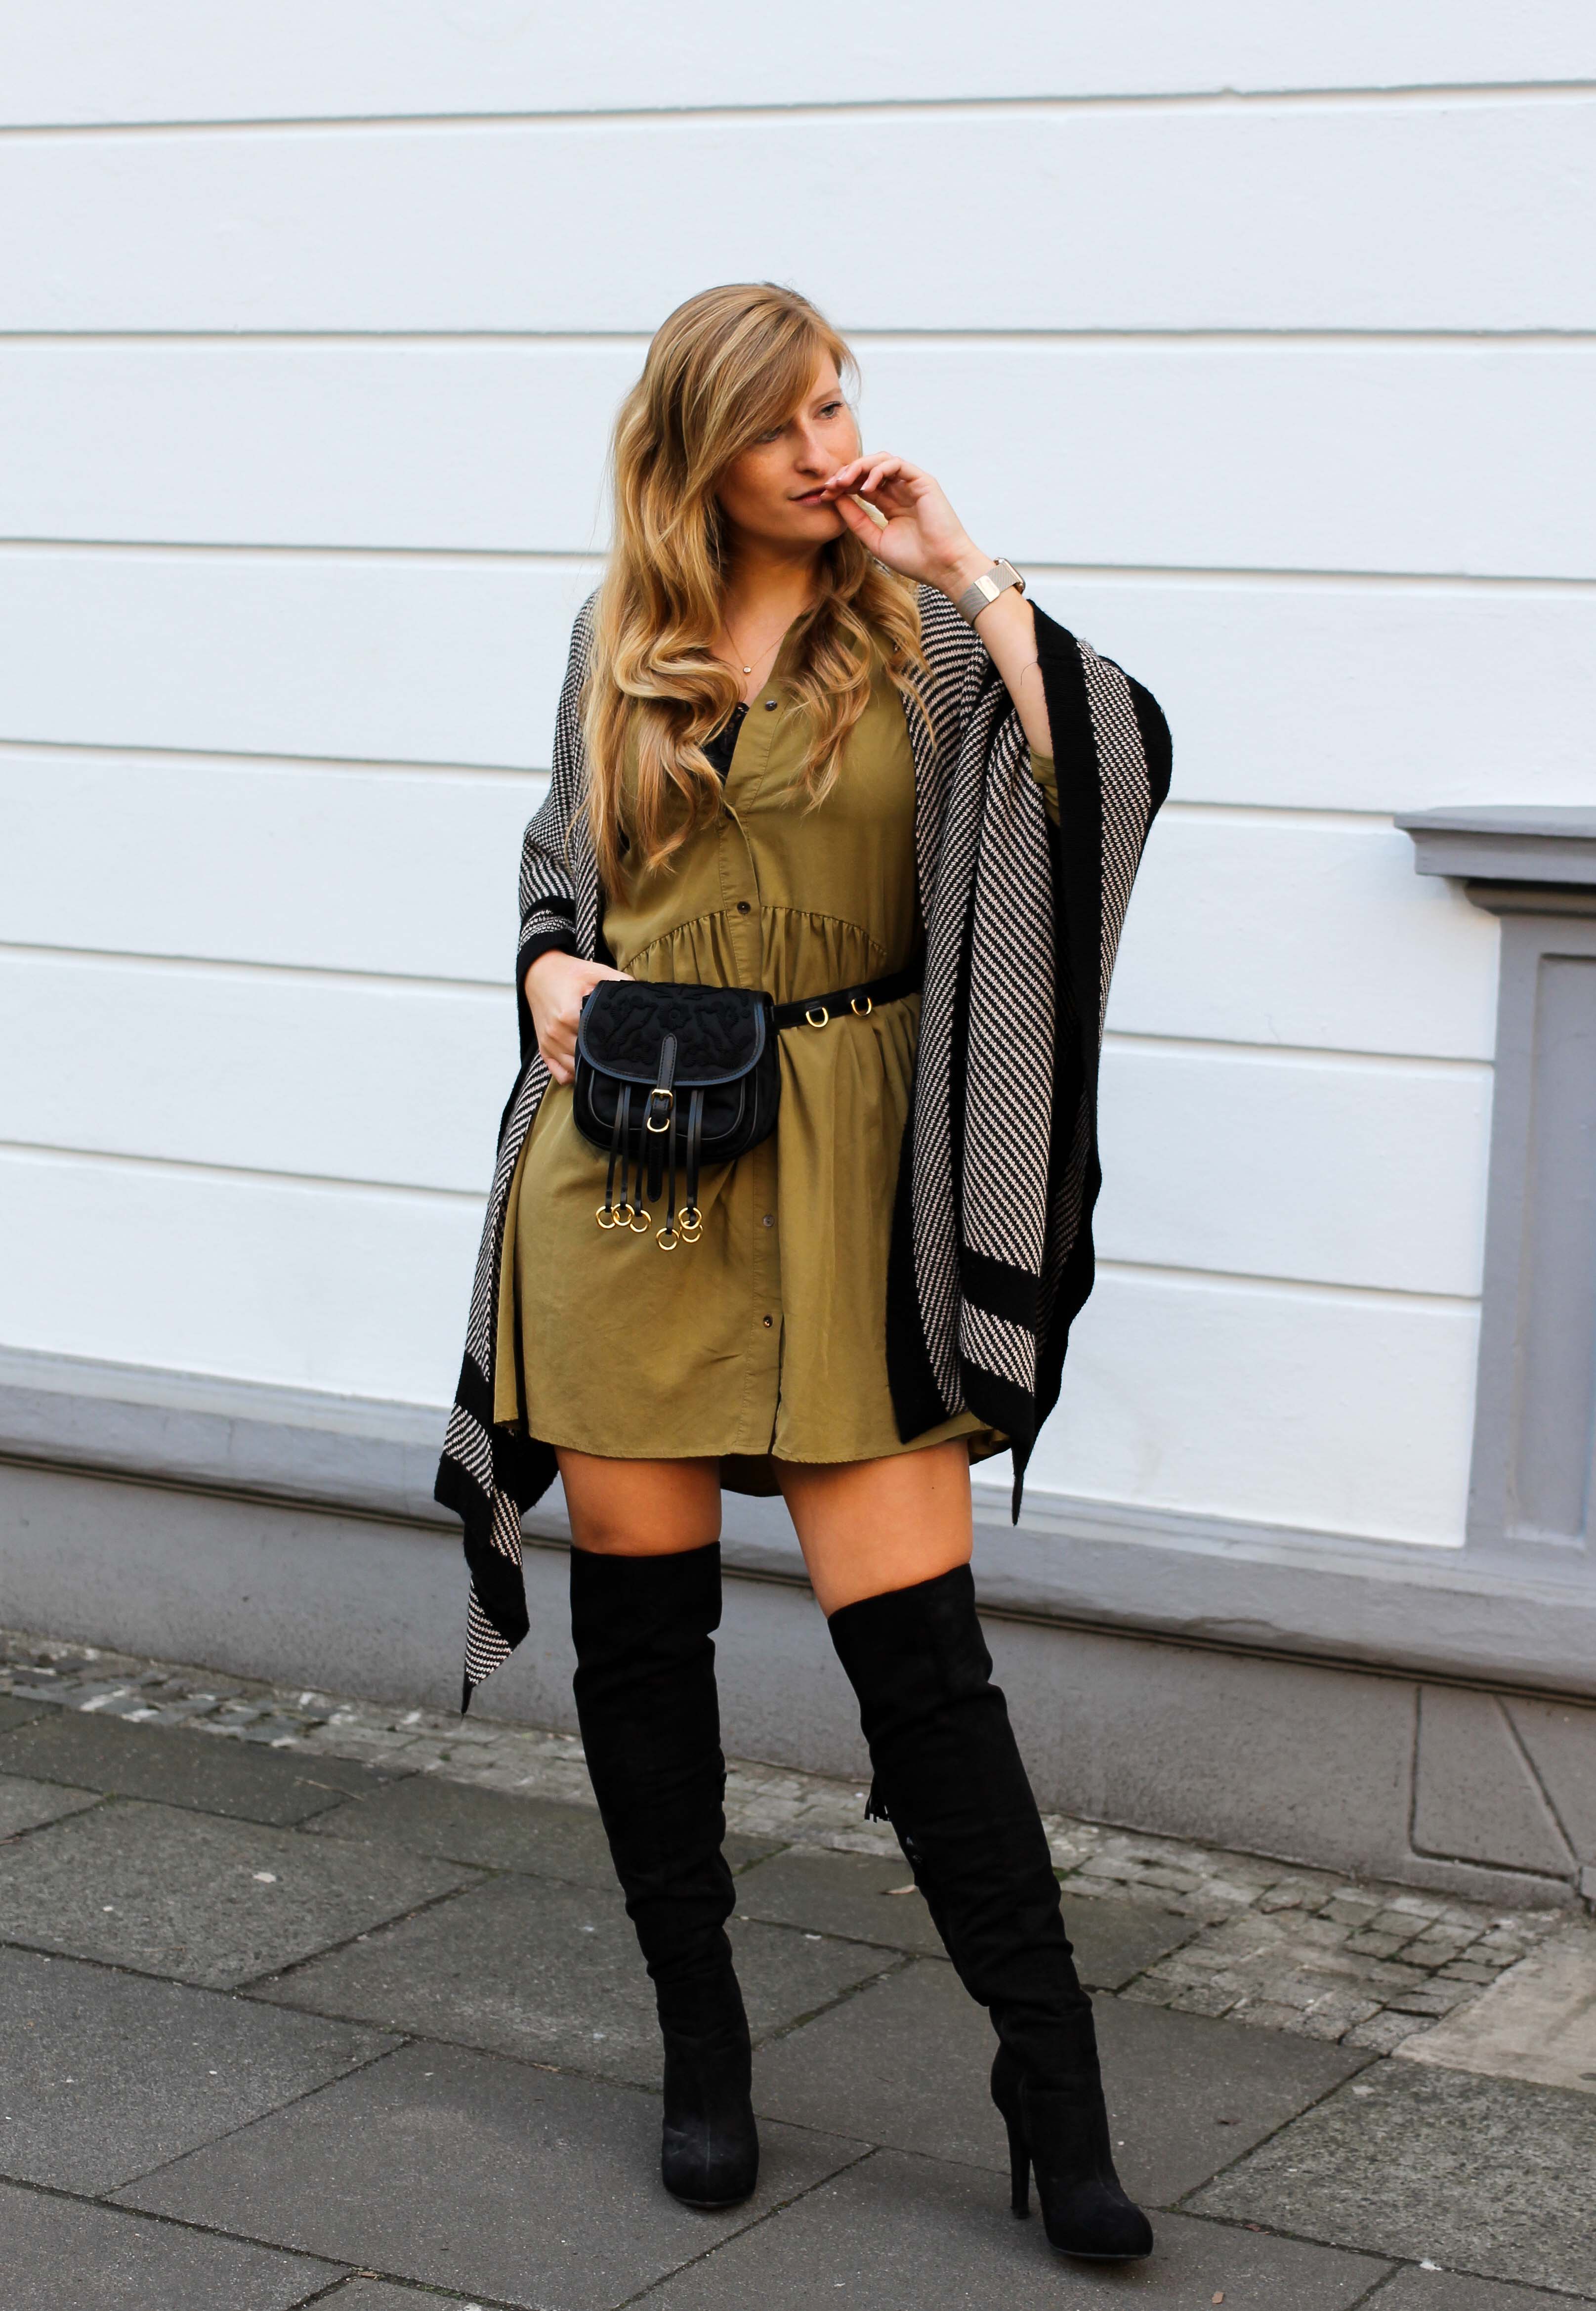 Overknees Gürteltasche Prada Trendtasche 2019 Poncho Second-Hand Kleidung kombinieren Streetstyle Outfit Bonn Zara Kleid grün 6